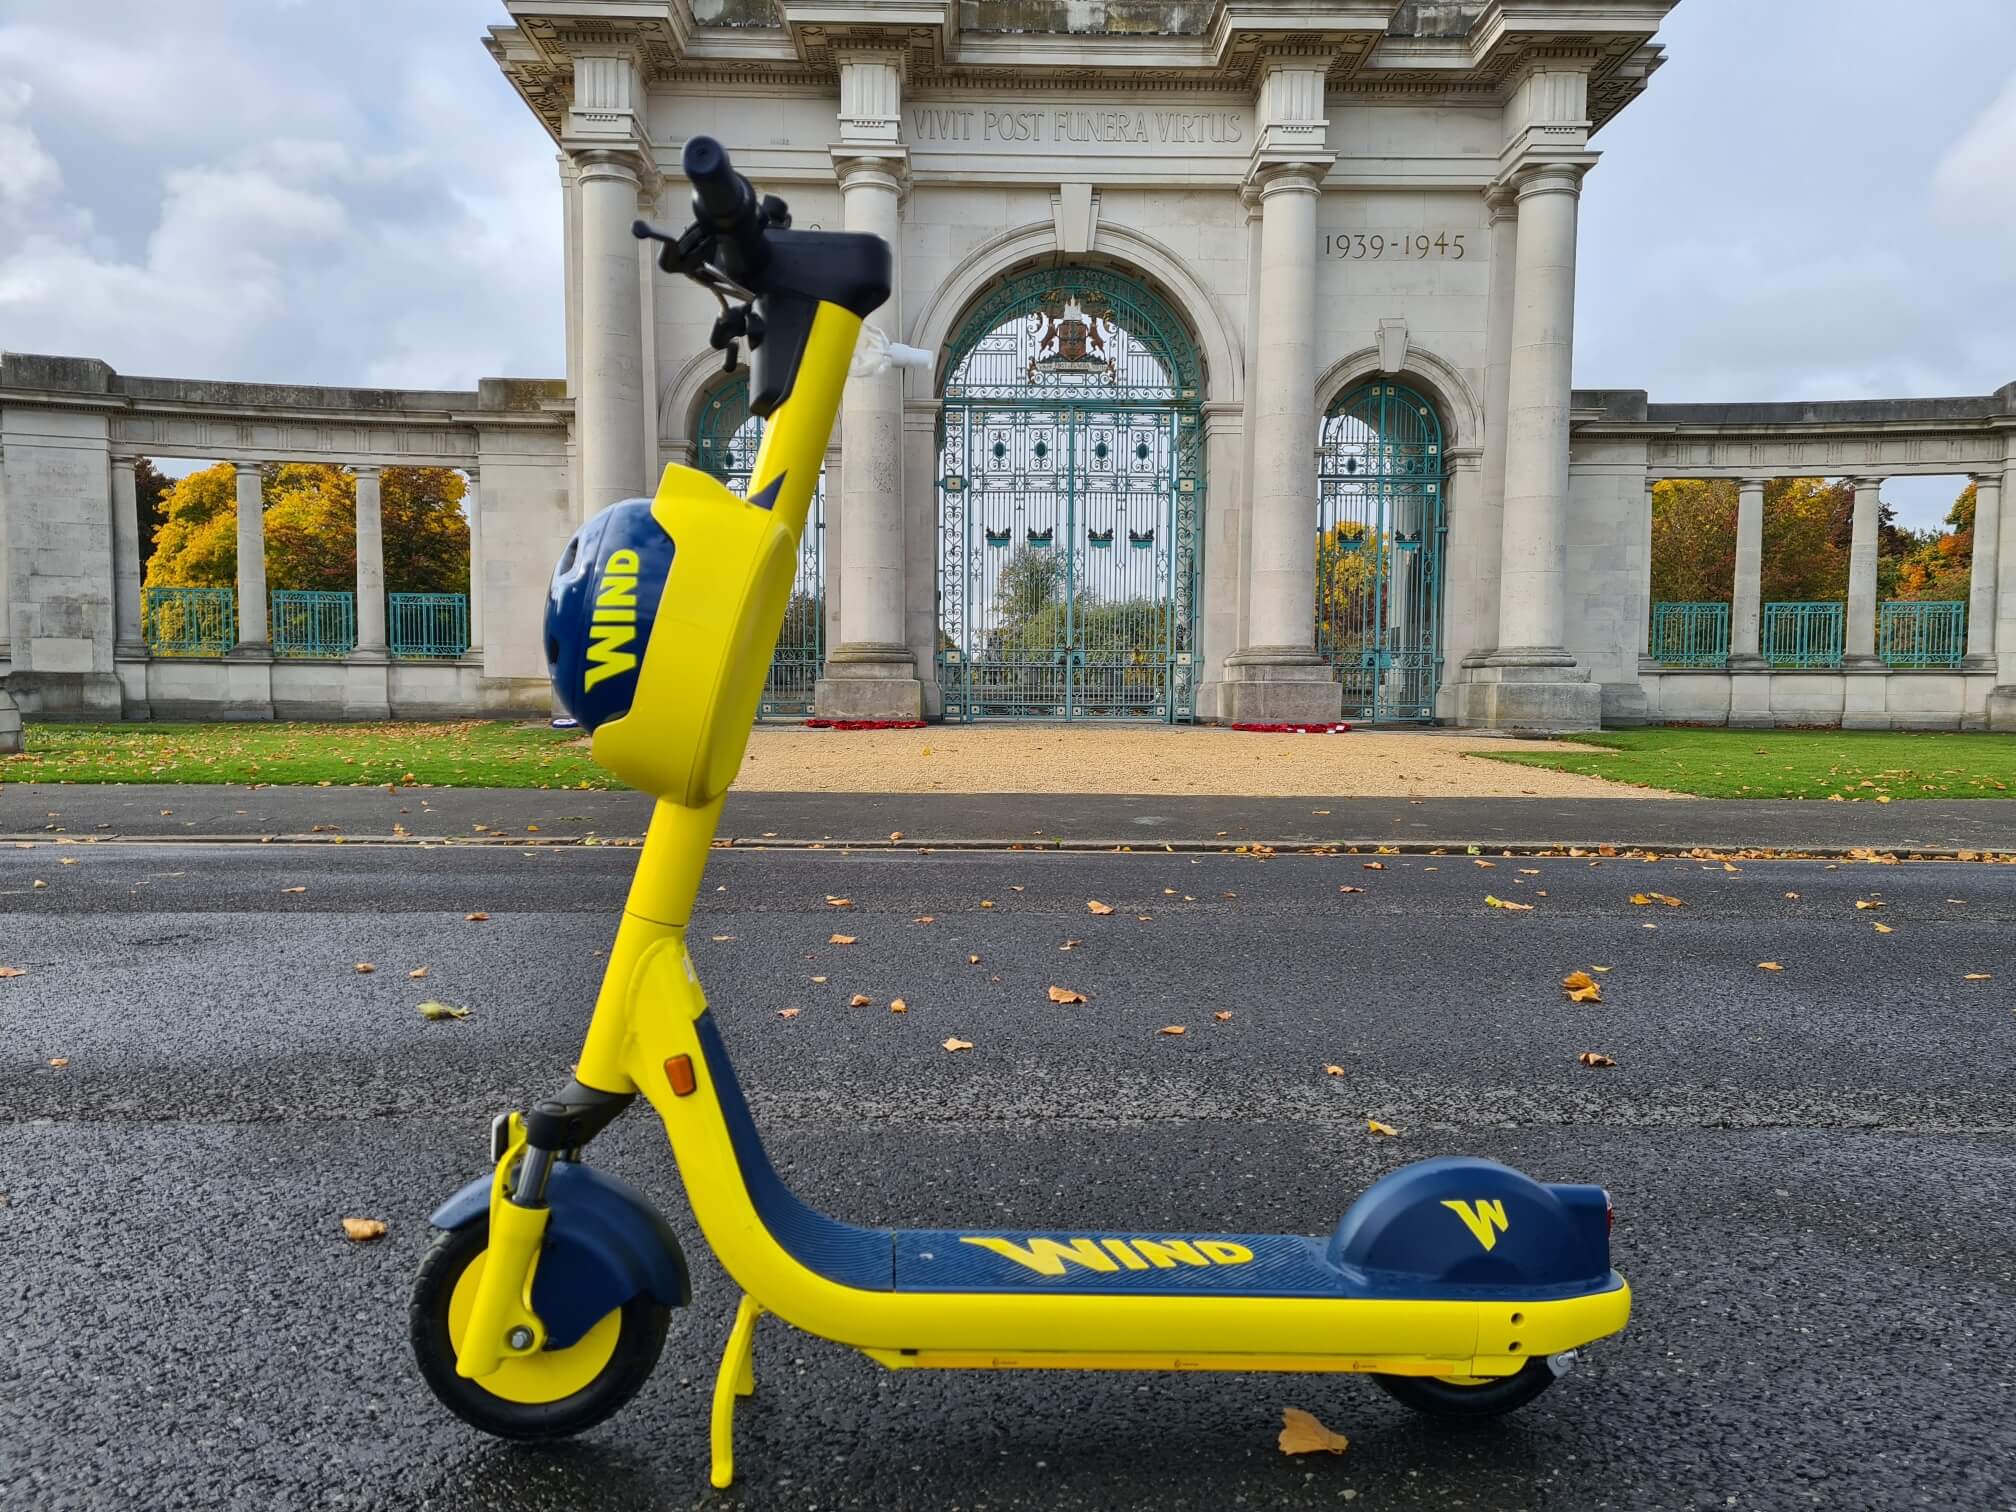 e-scooter outside memorial gardens